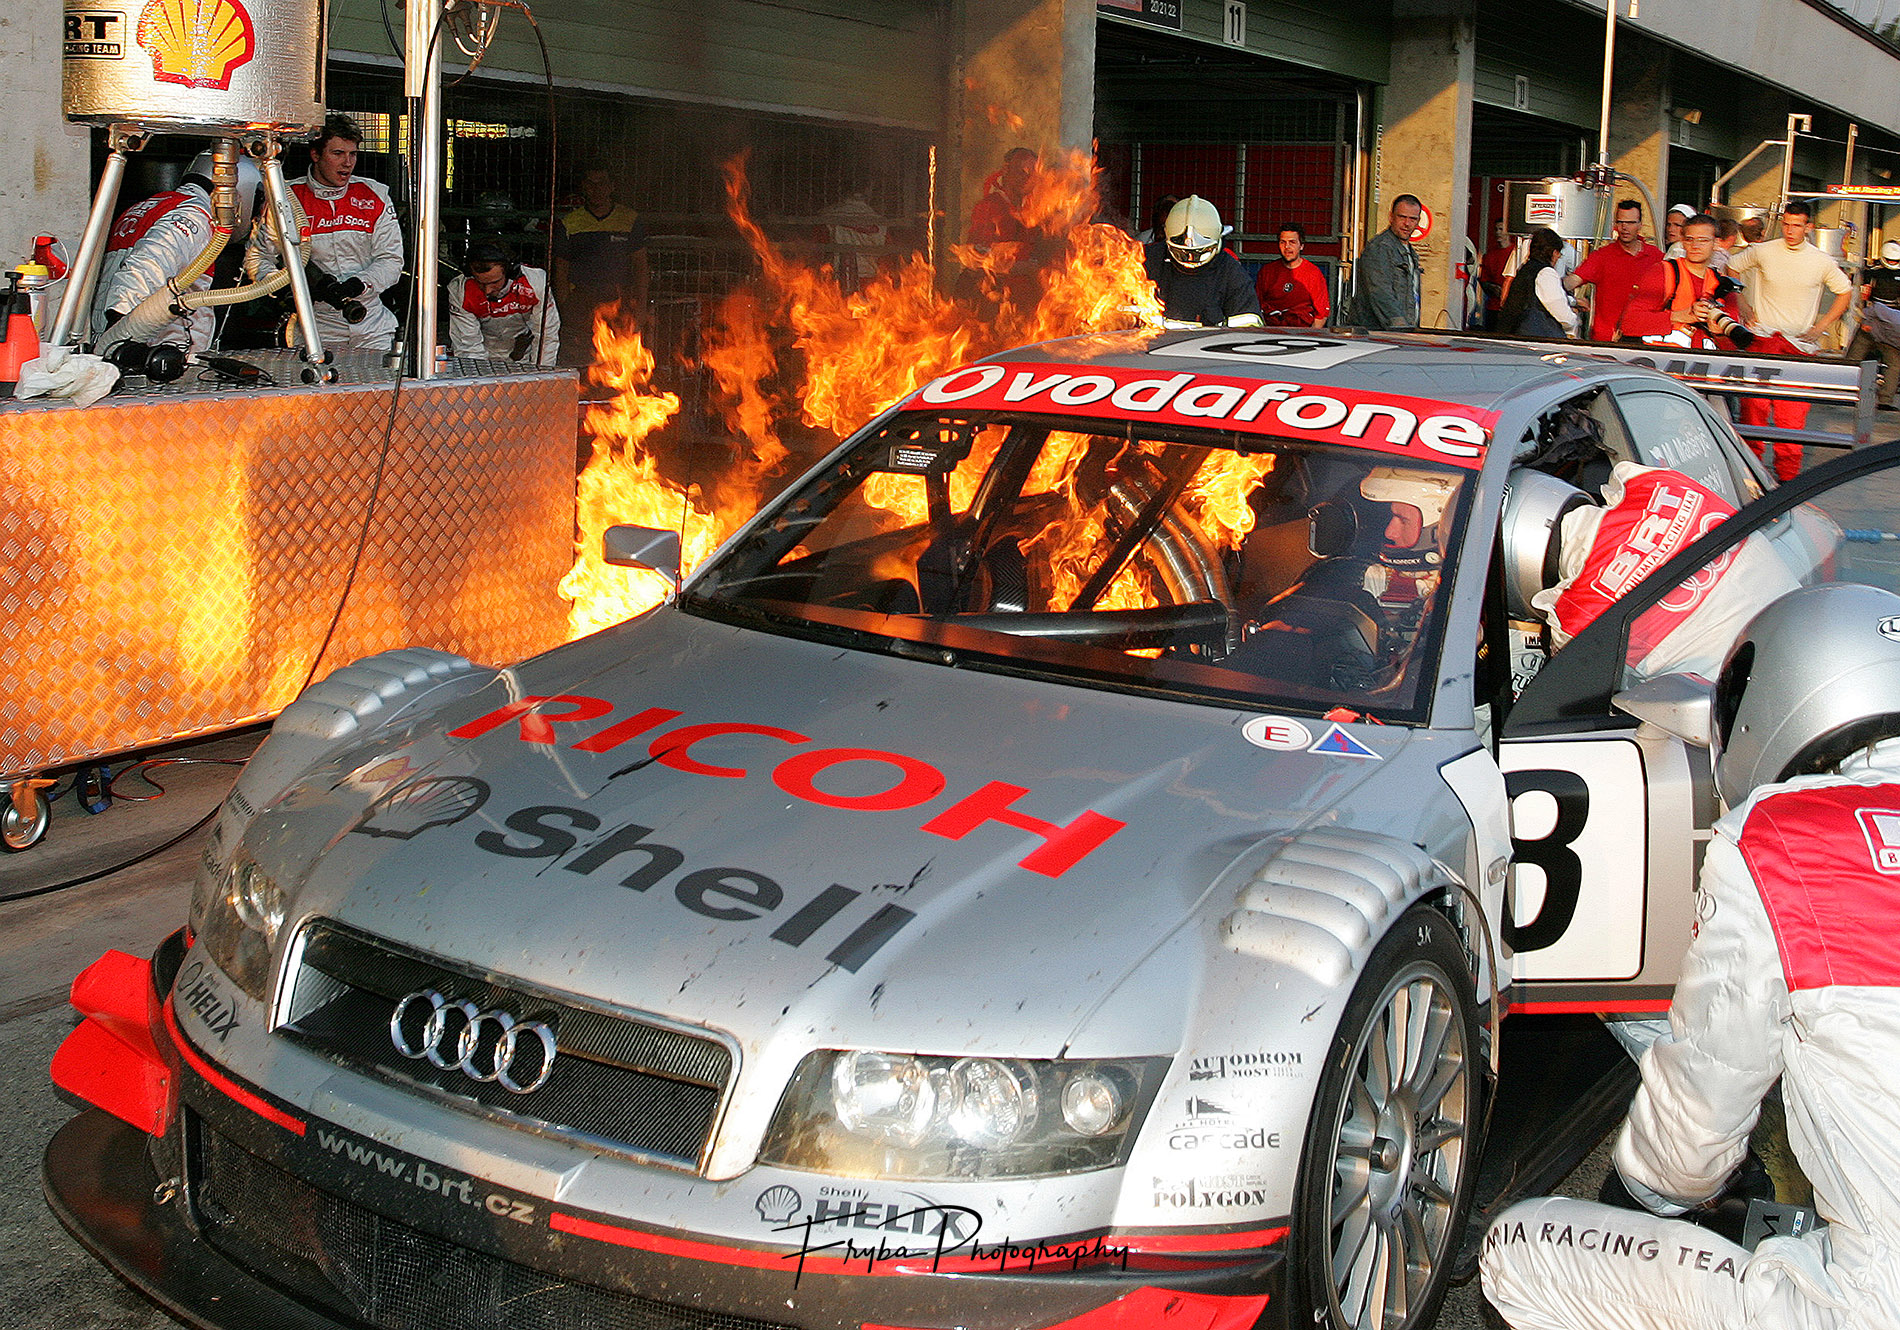 Brno-Audi-Fire-2007